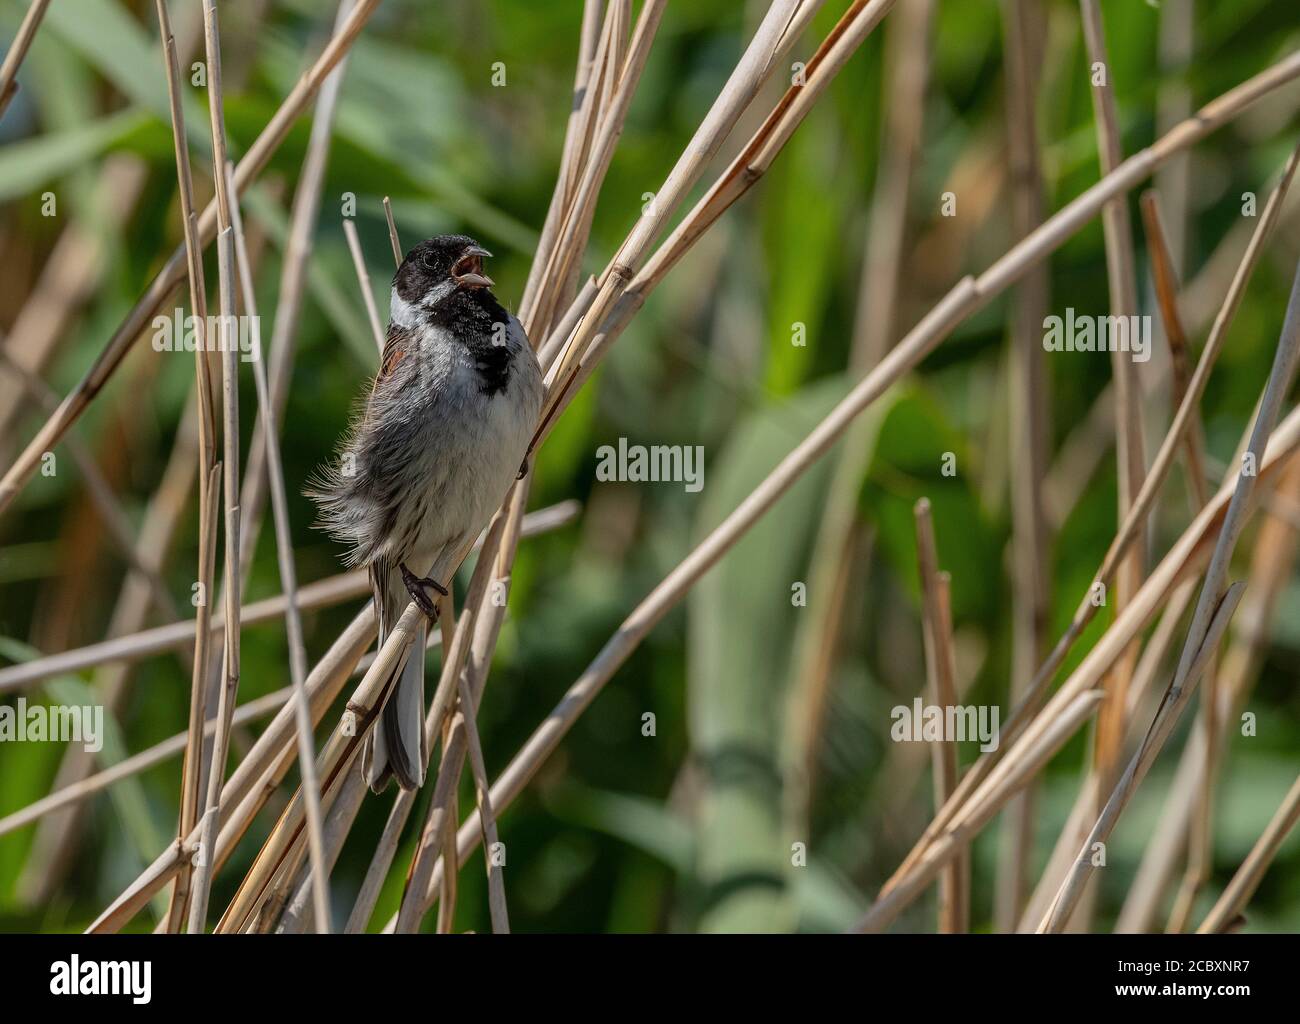 Common reed bunting, Emberiza schoeniclus, singing among reeds. Stock Photo